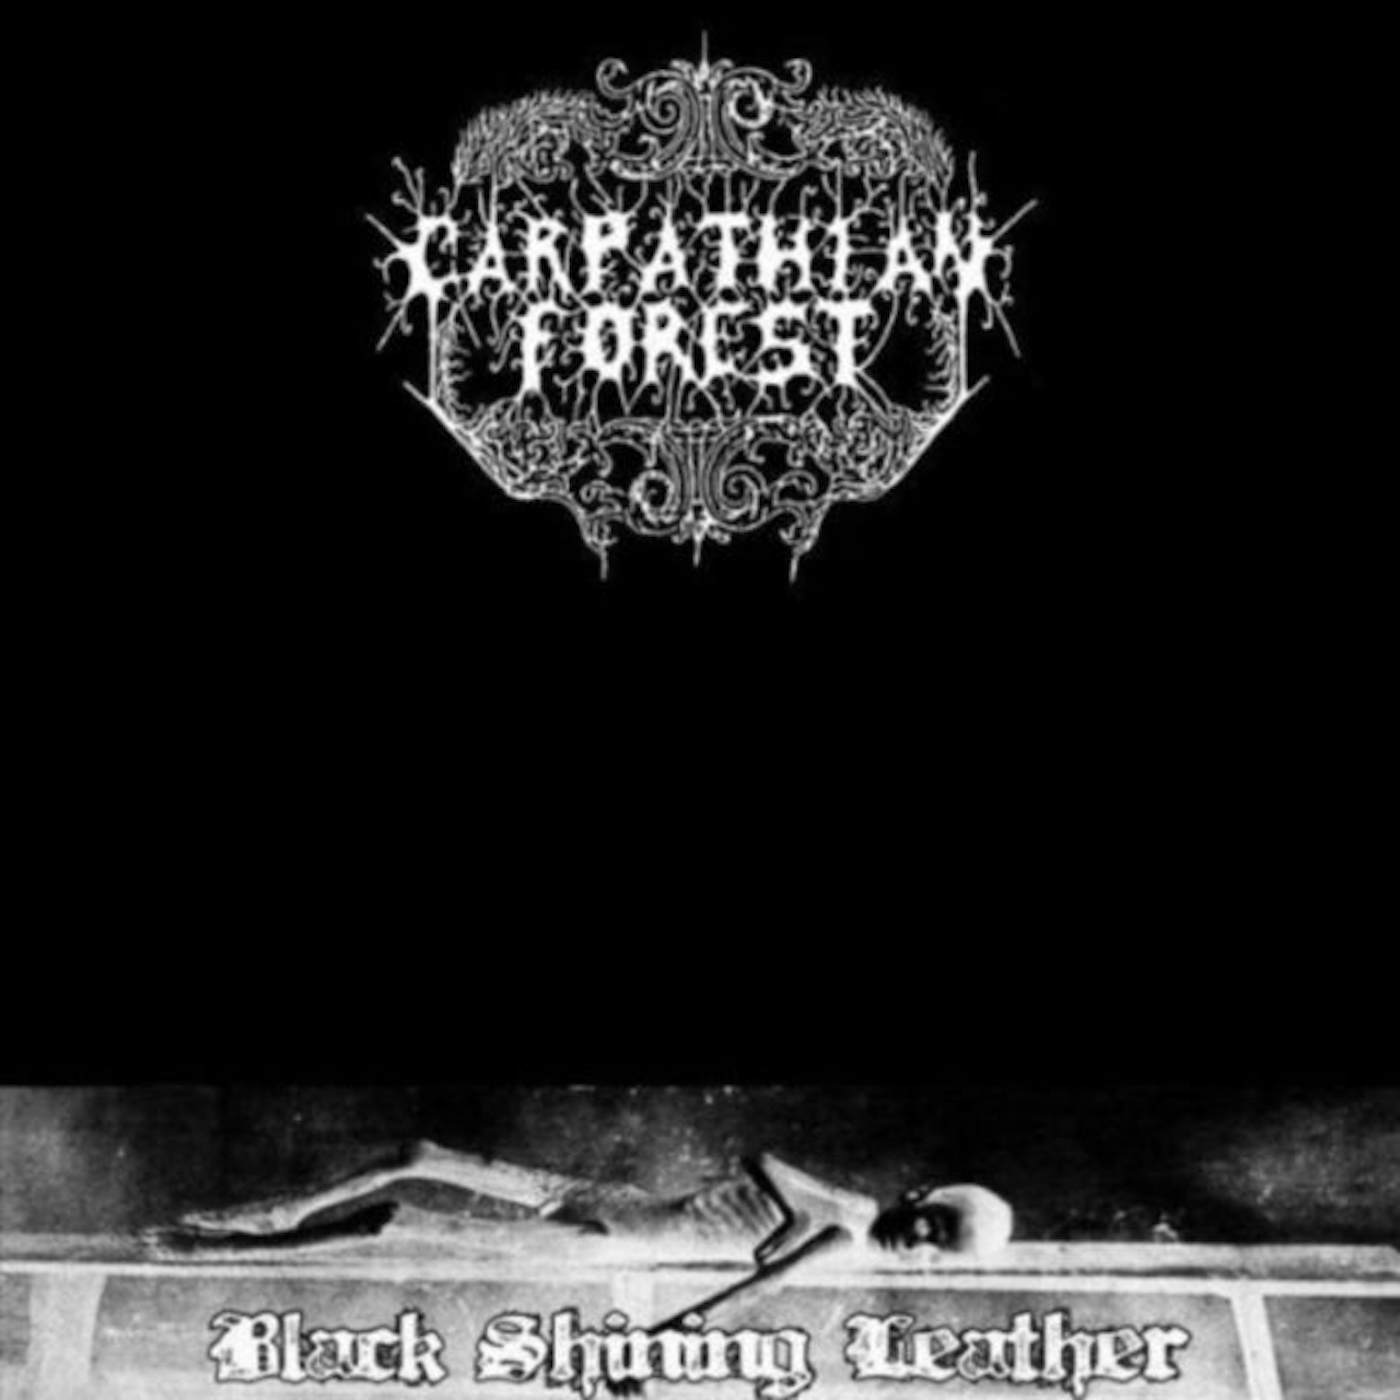 Carpathian Forest CD - Black Shining Leather